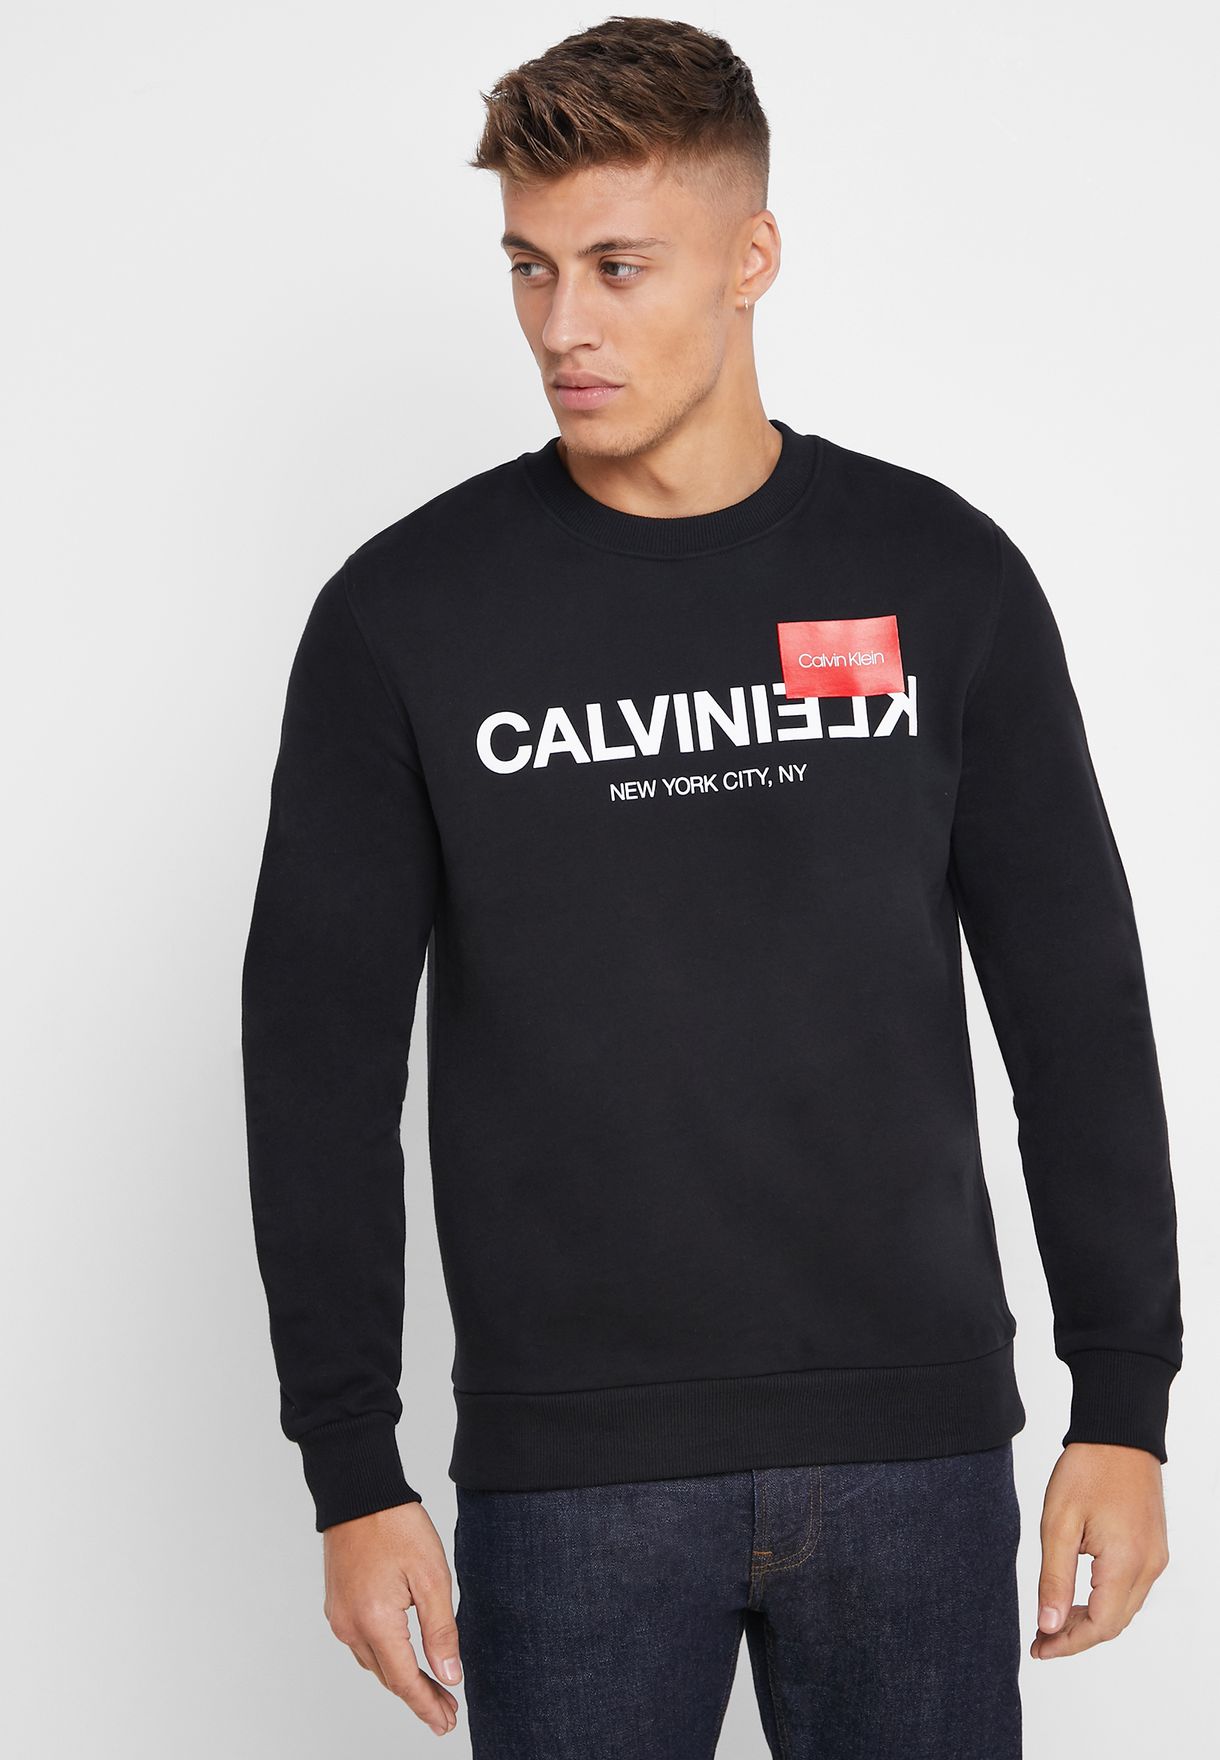 Calvin Klein Logo Sweatshirt Top Sellers, UP TO 66% OFF | www 